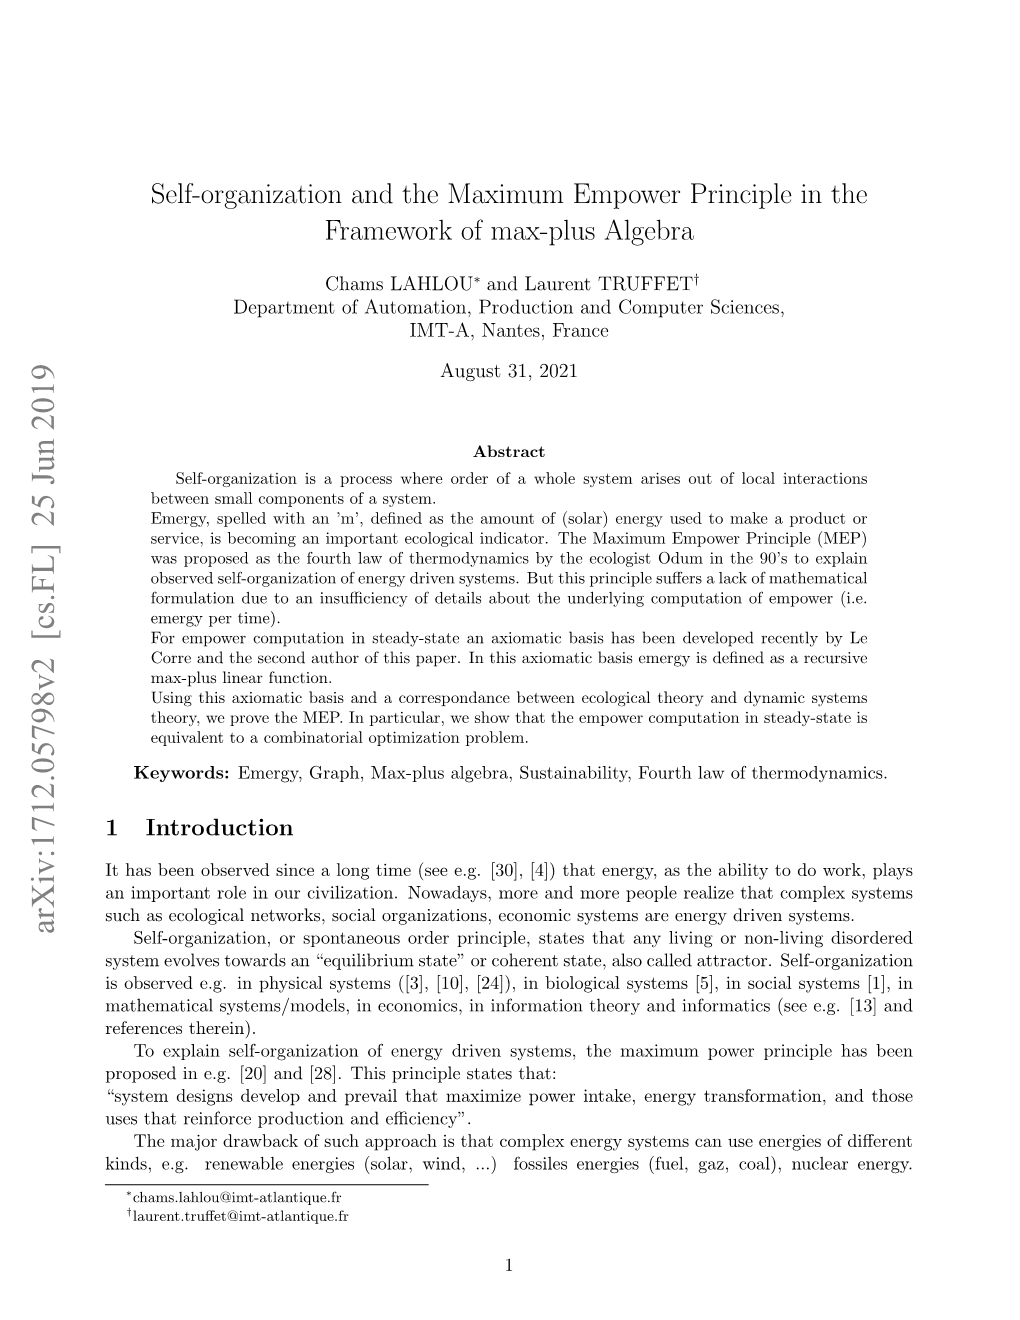 Self-Organization and the Maximum Empower Principle in the Framework of Max-Plus Algebra